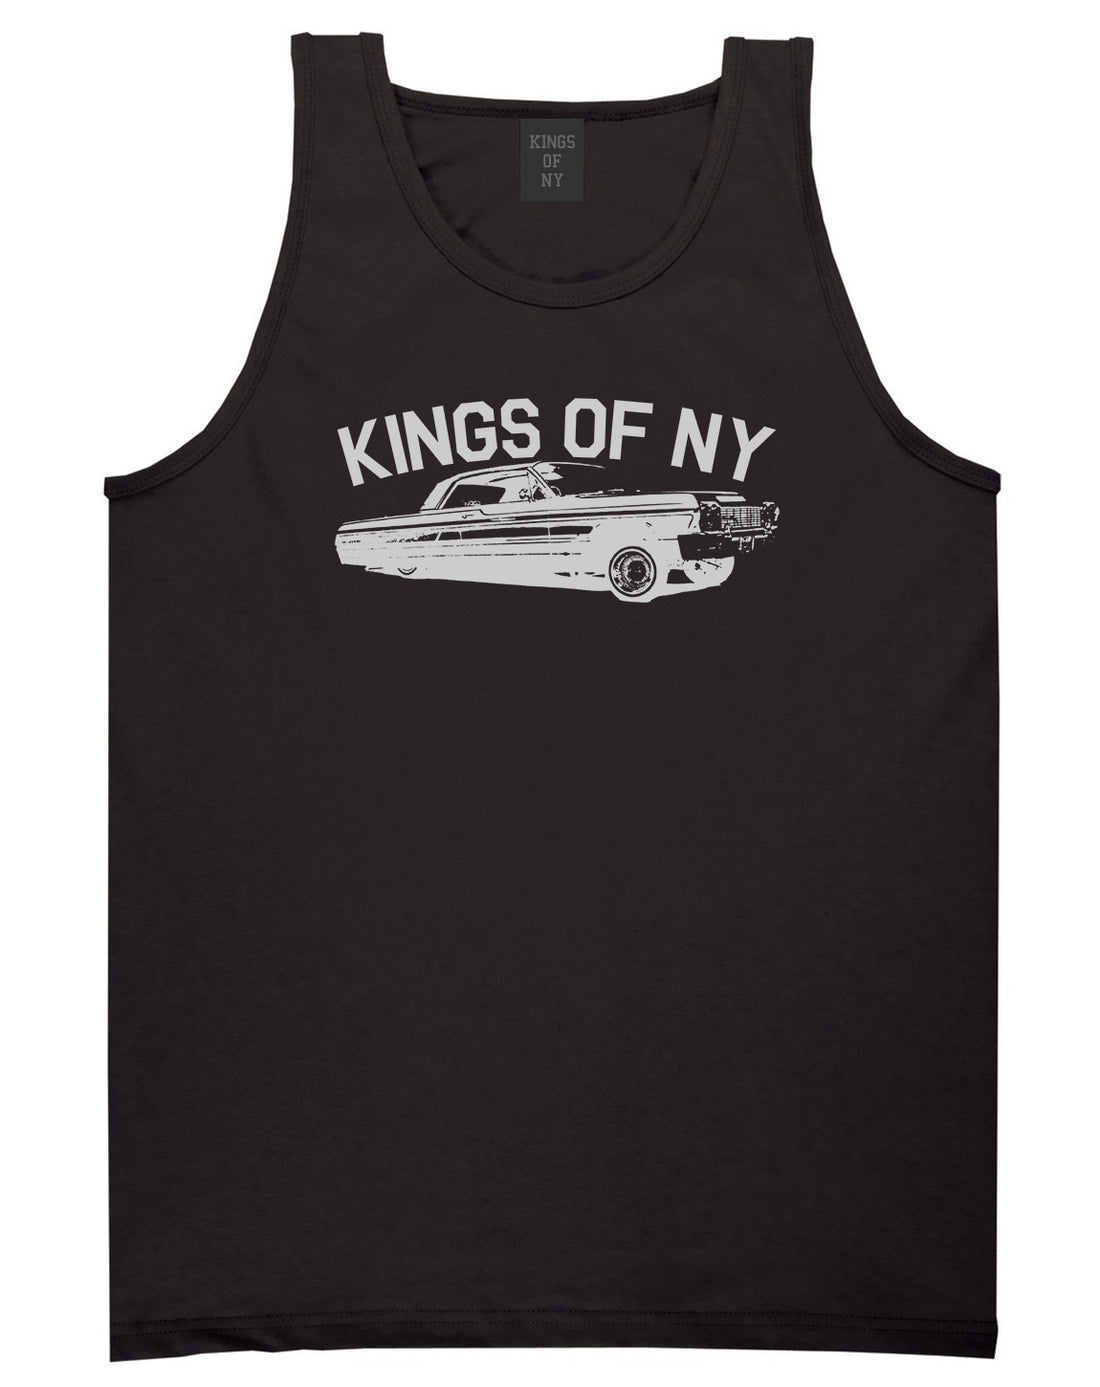 Kings Of NY Lowrider Mens Tank Top Shirt Black by Kings Of NY